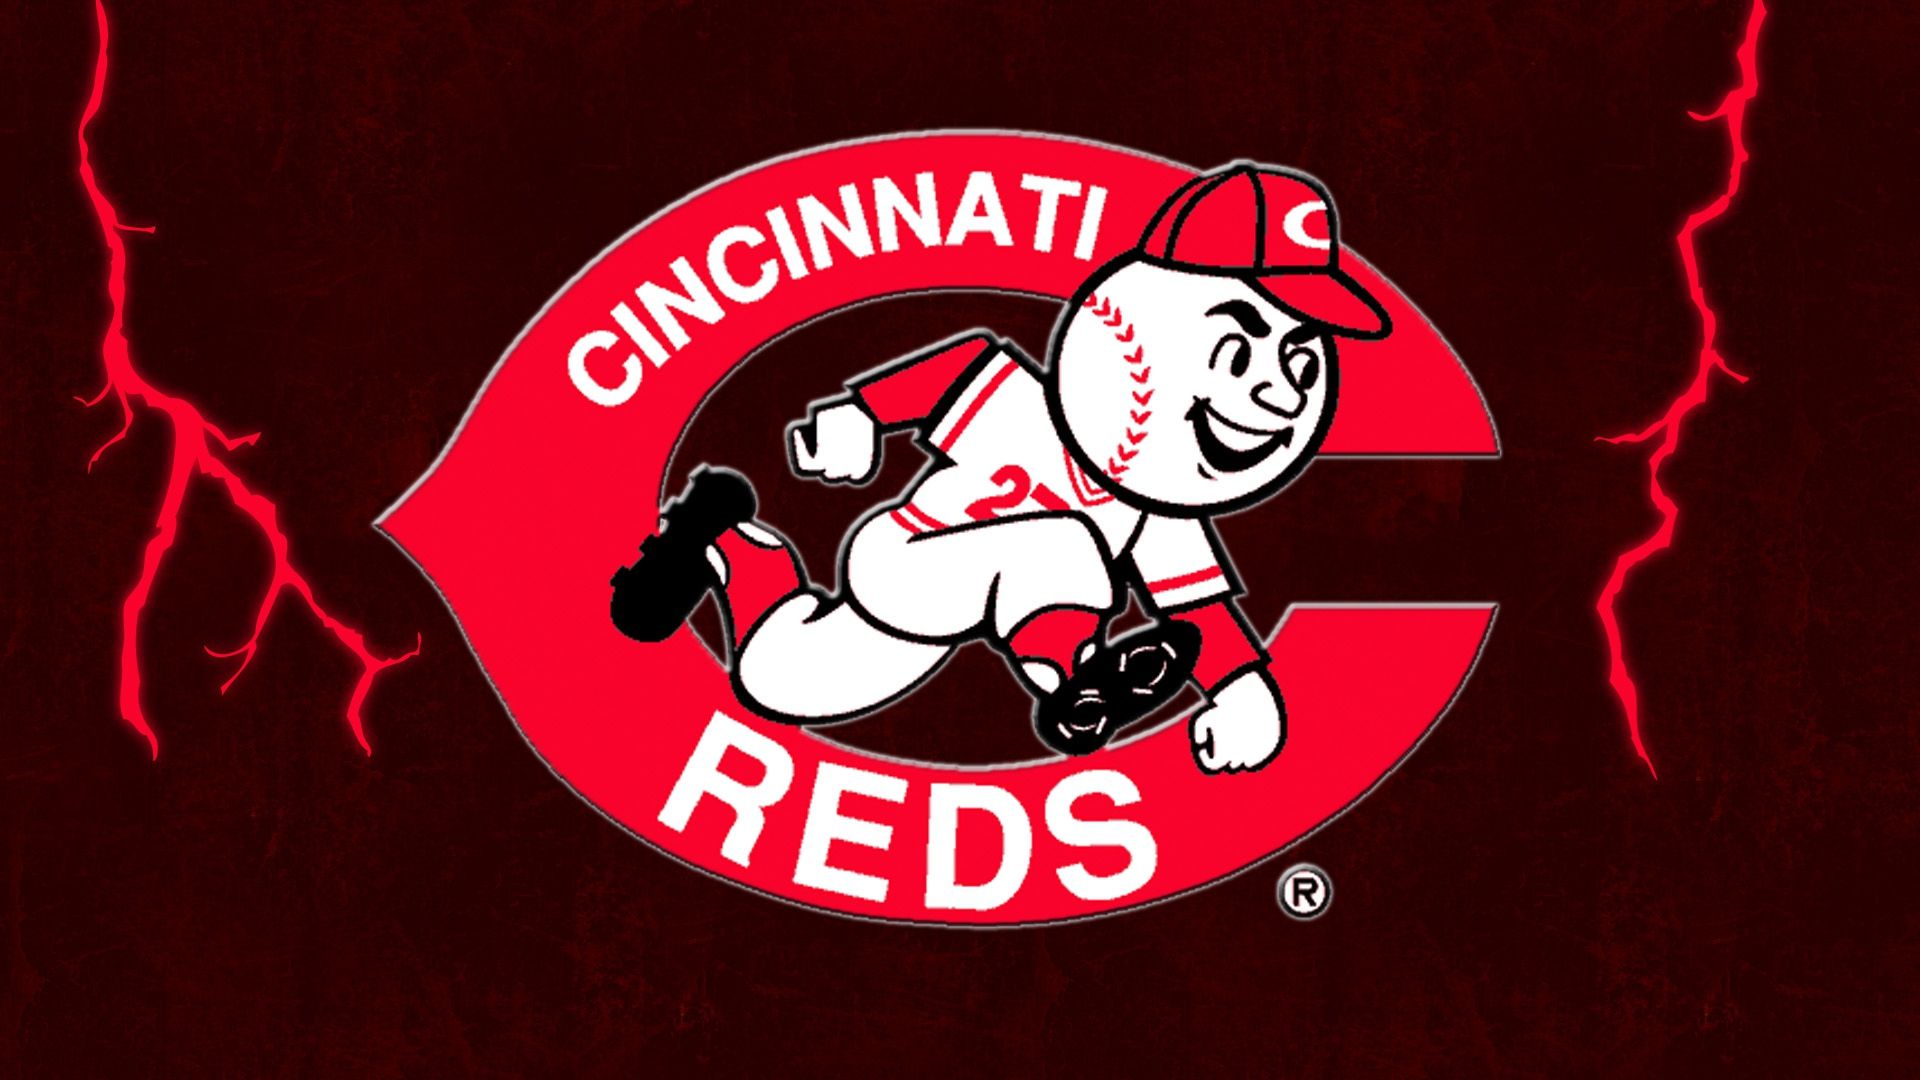 Cincinnati Reds Wallpaper Image Photo Picture Background